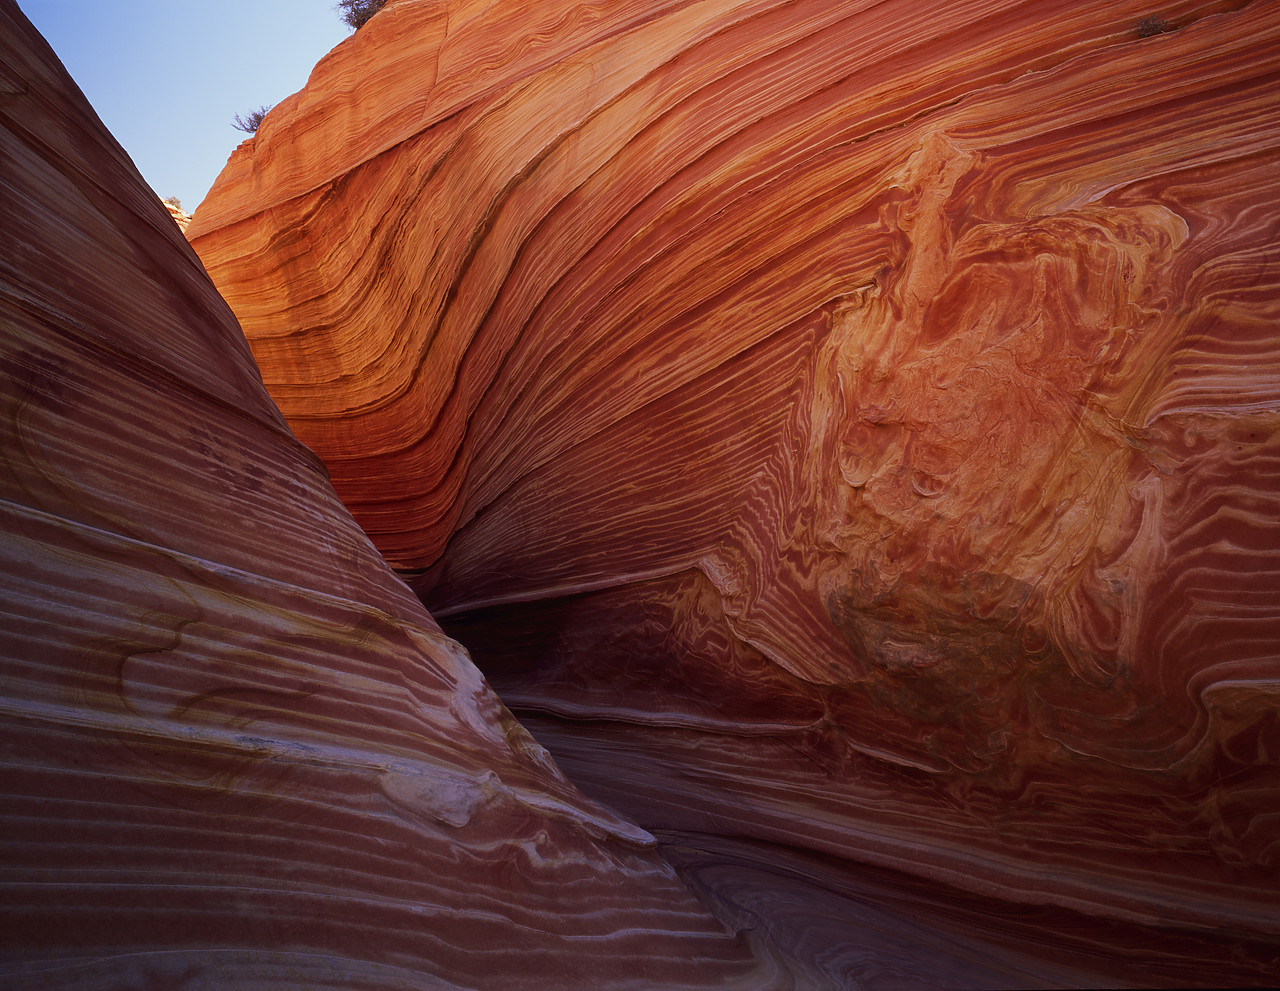 #966210-1 - Sandstone Design, Paria Canyon, Arizona, USA